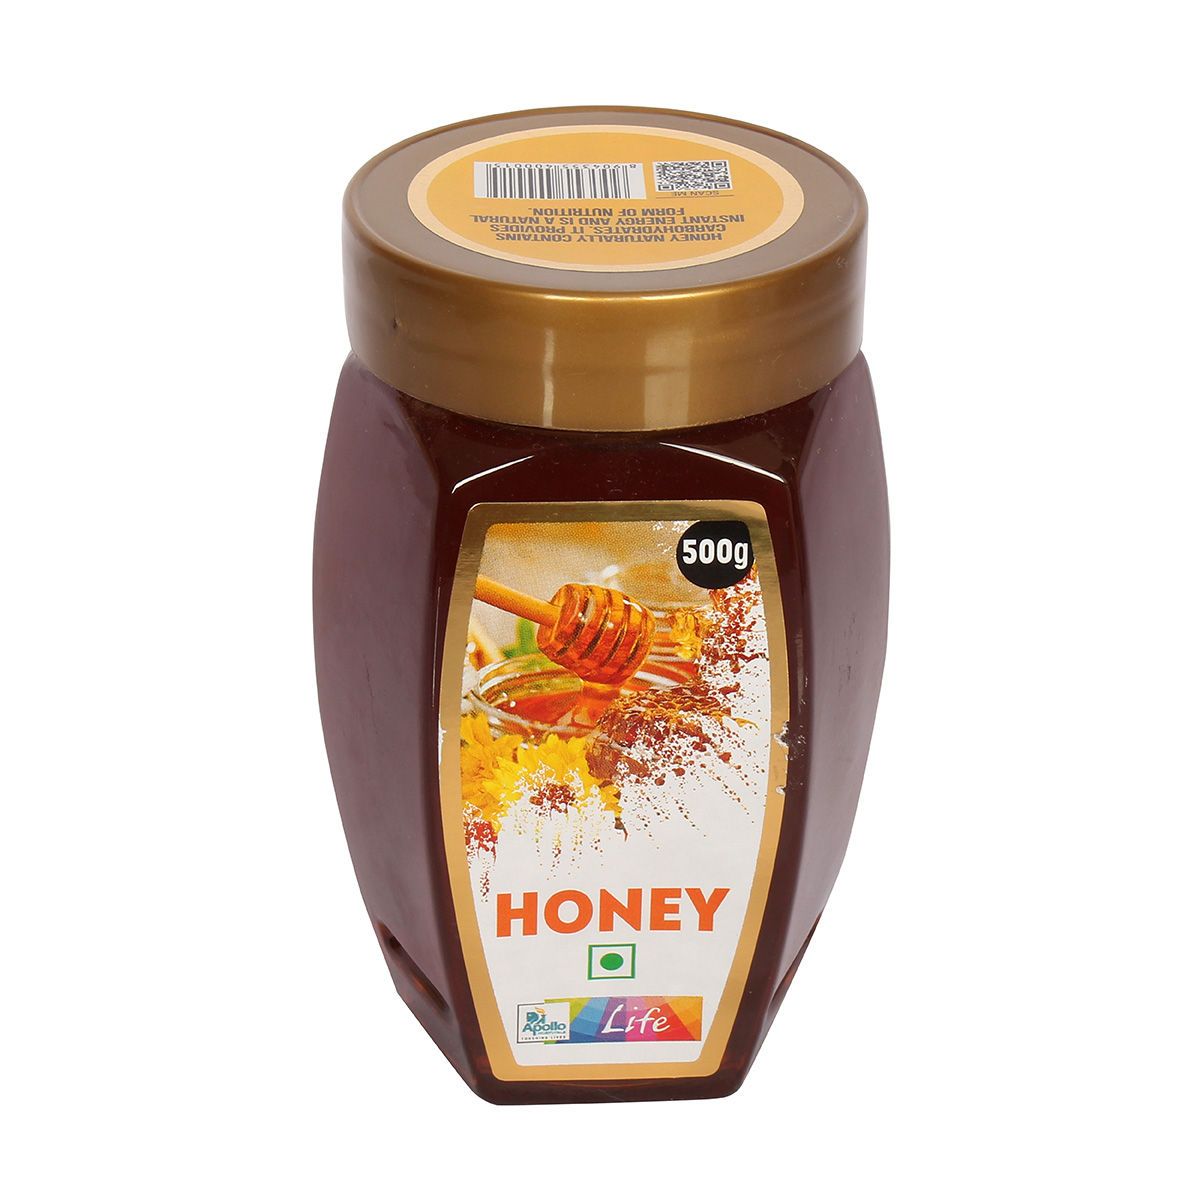 Apollo Life Honey, 500 gm, Pack of 1 